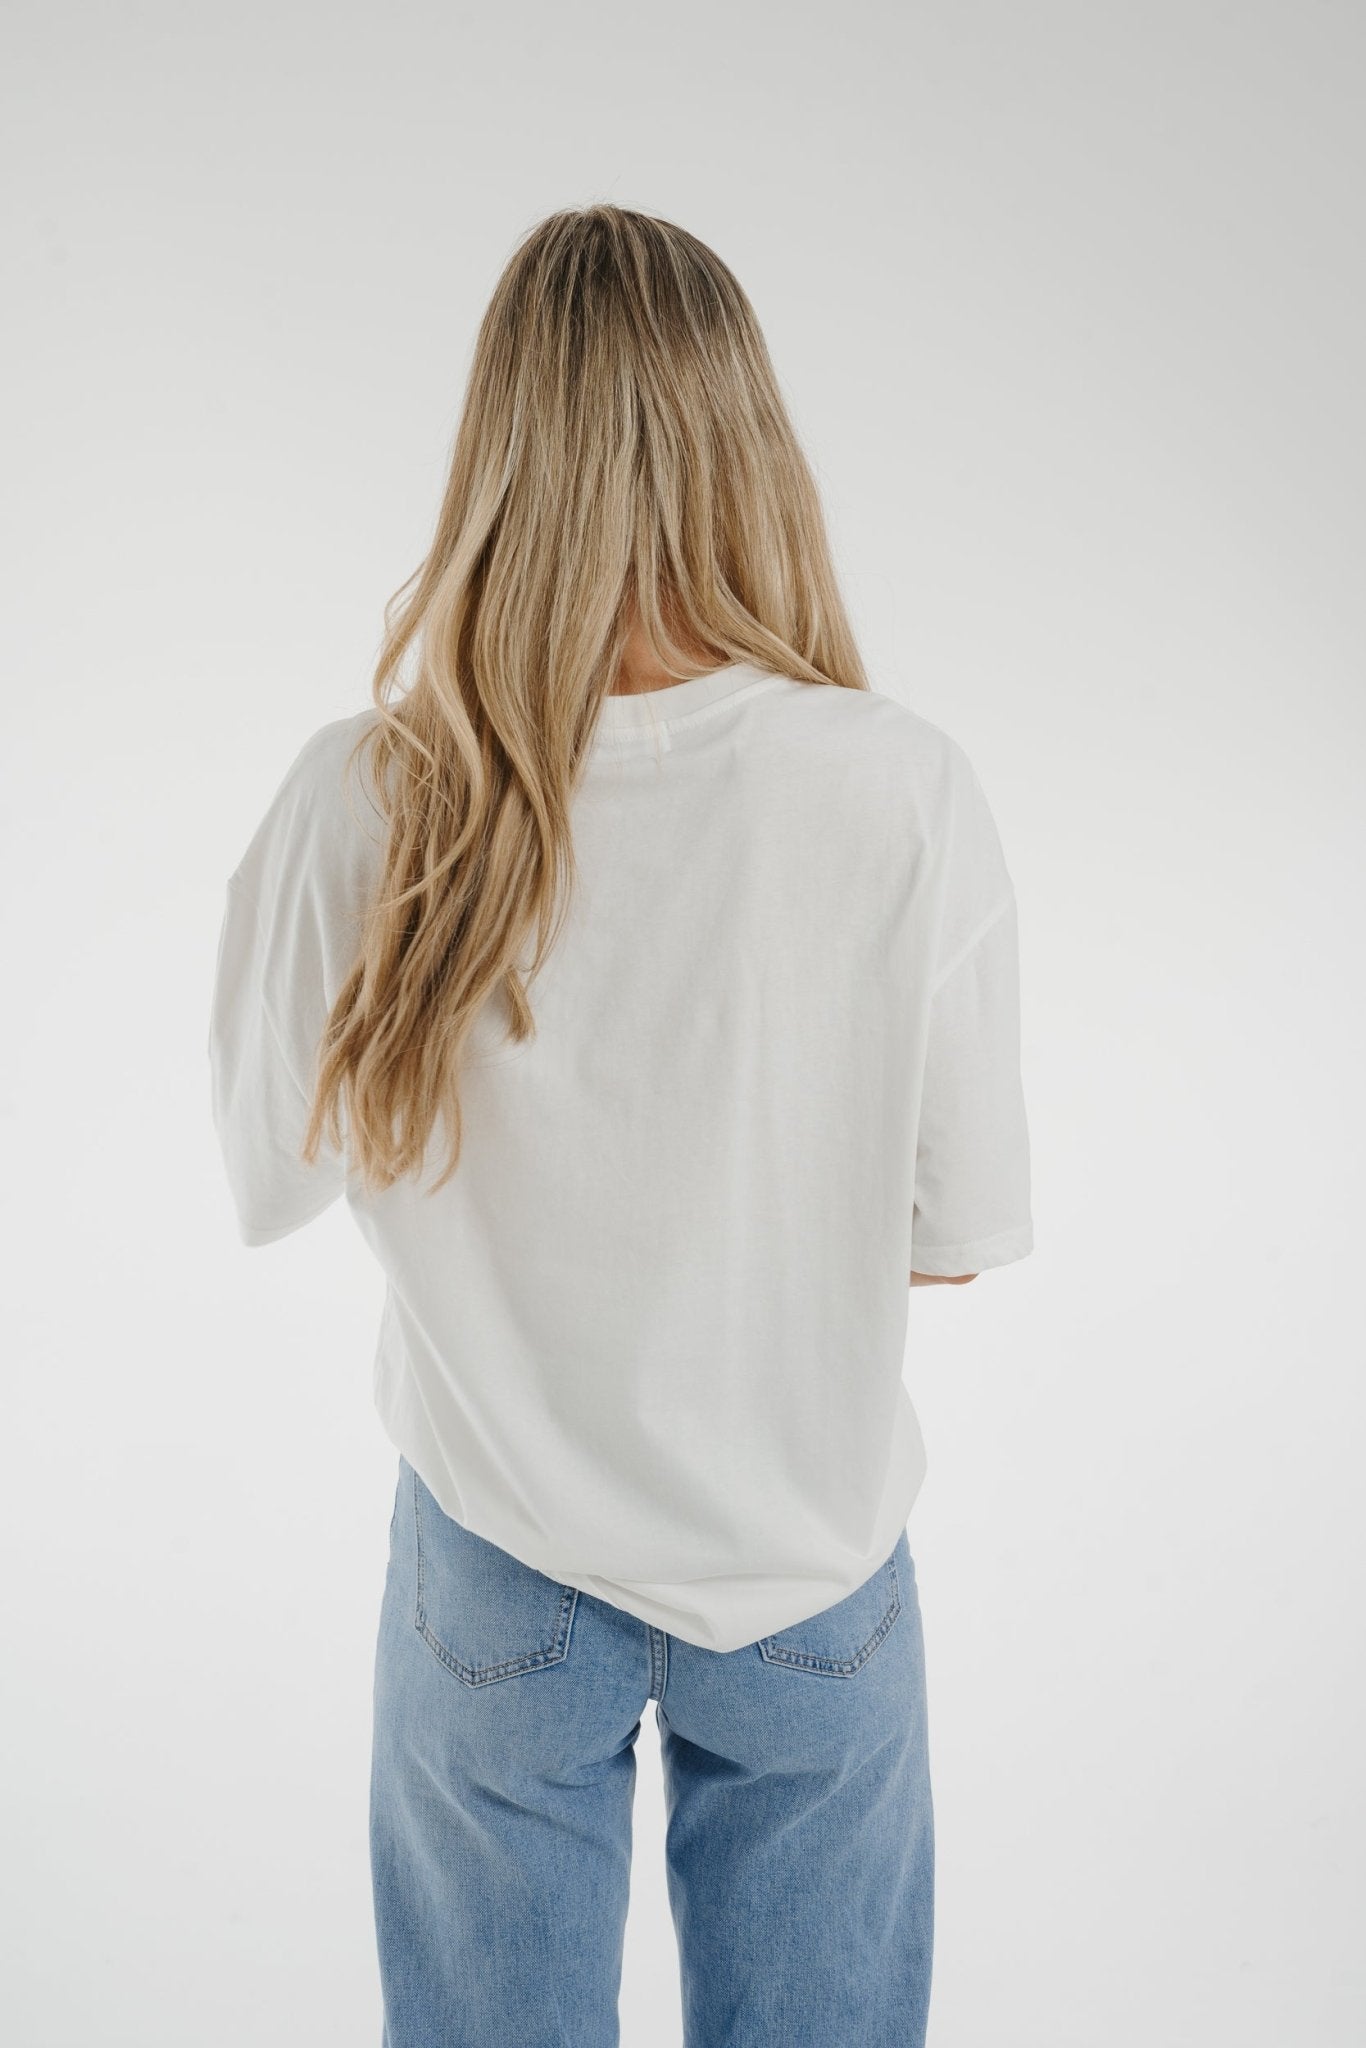 Jane Drop Shoulder T-Shirt In White - The Walk in Wardrobe